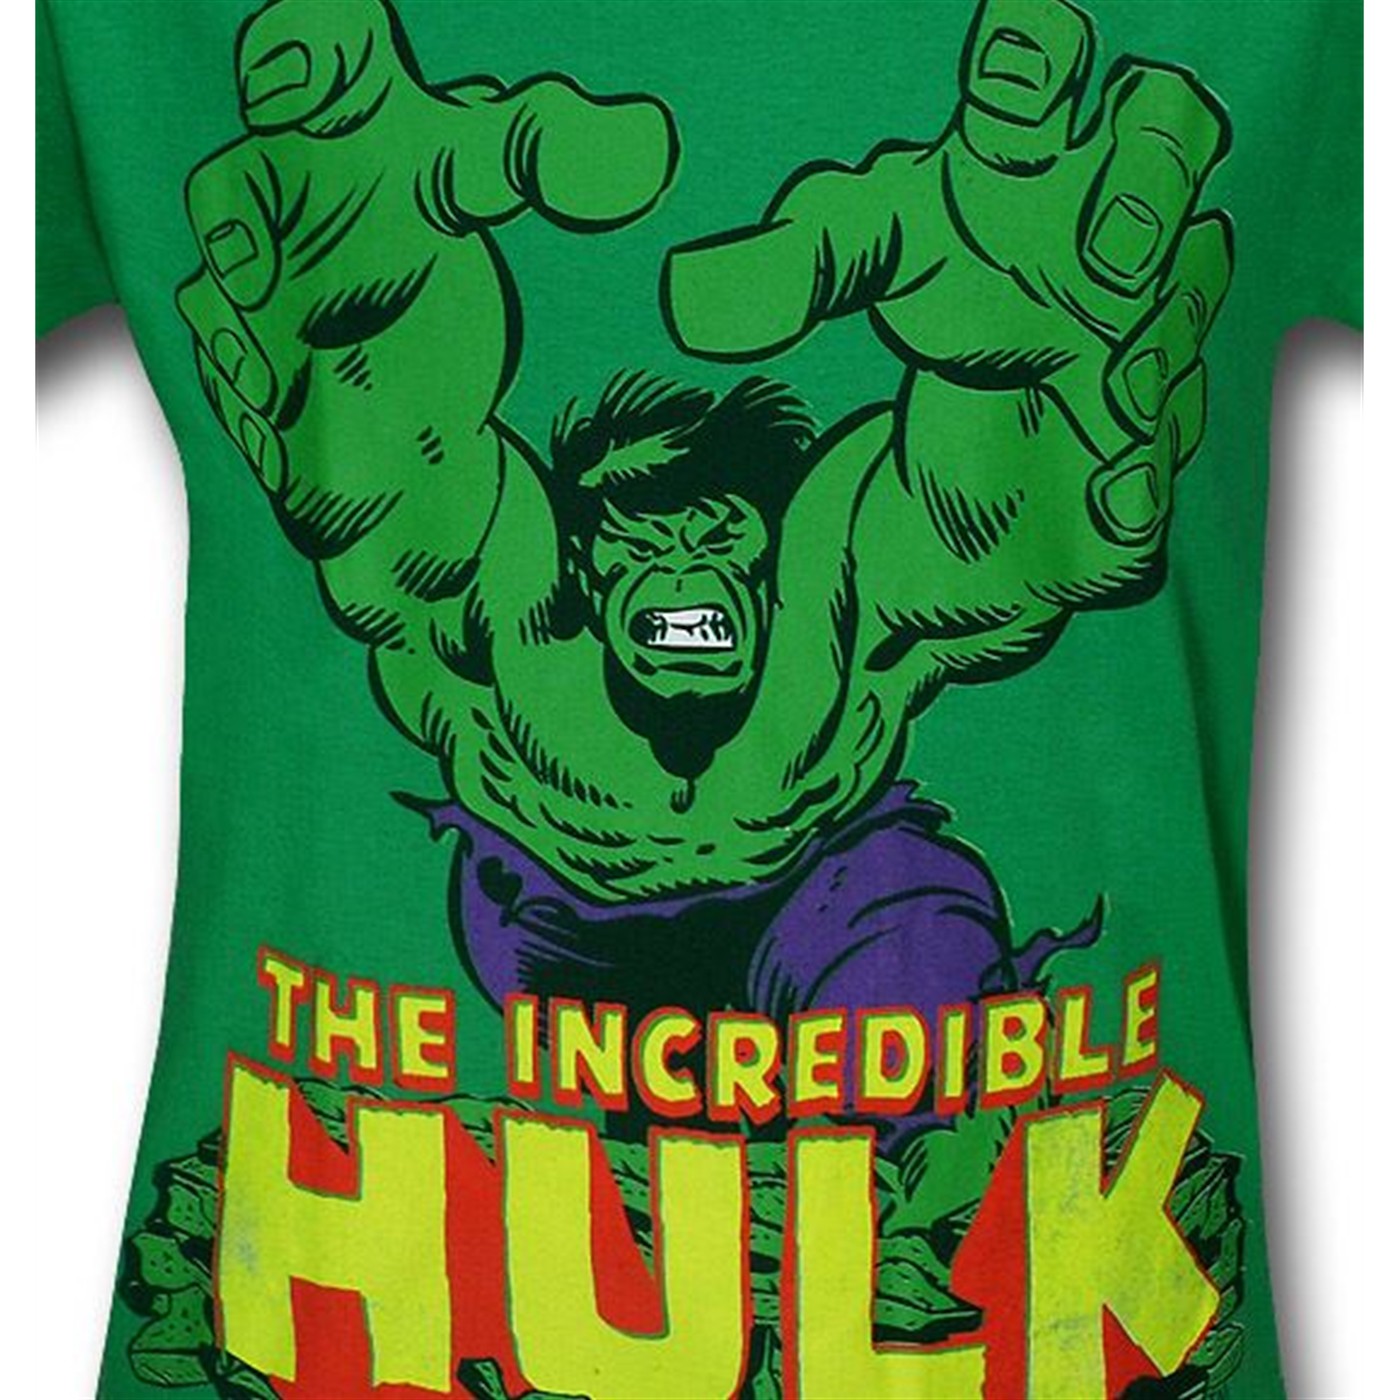 Hulk Kids Grab & Destroy T-Shirt